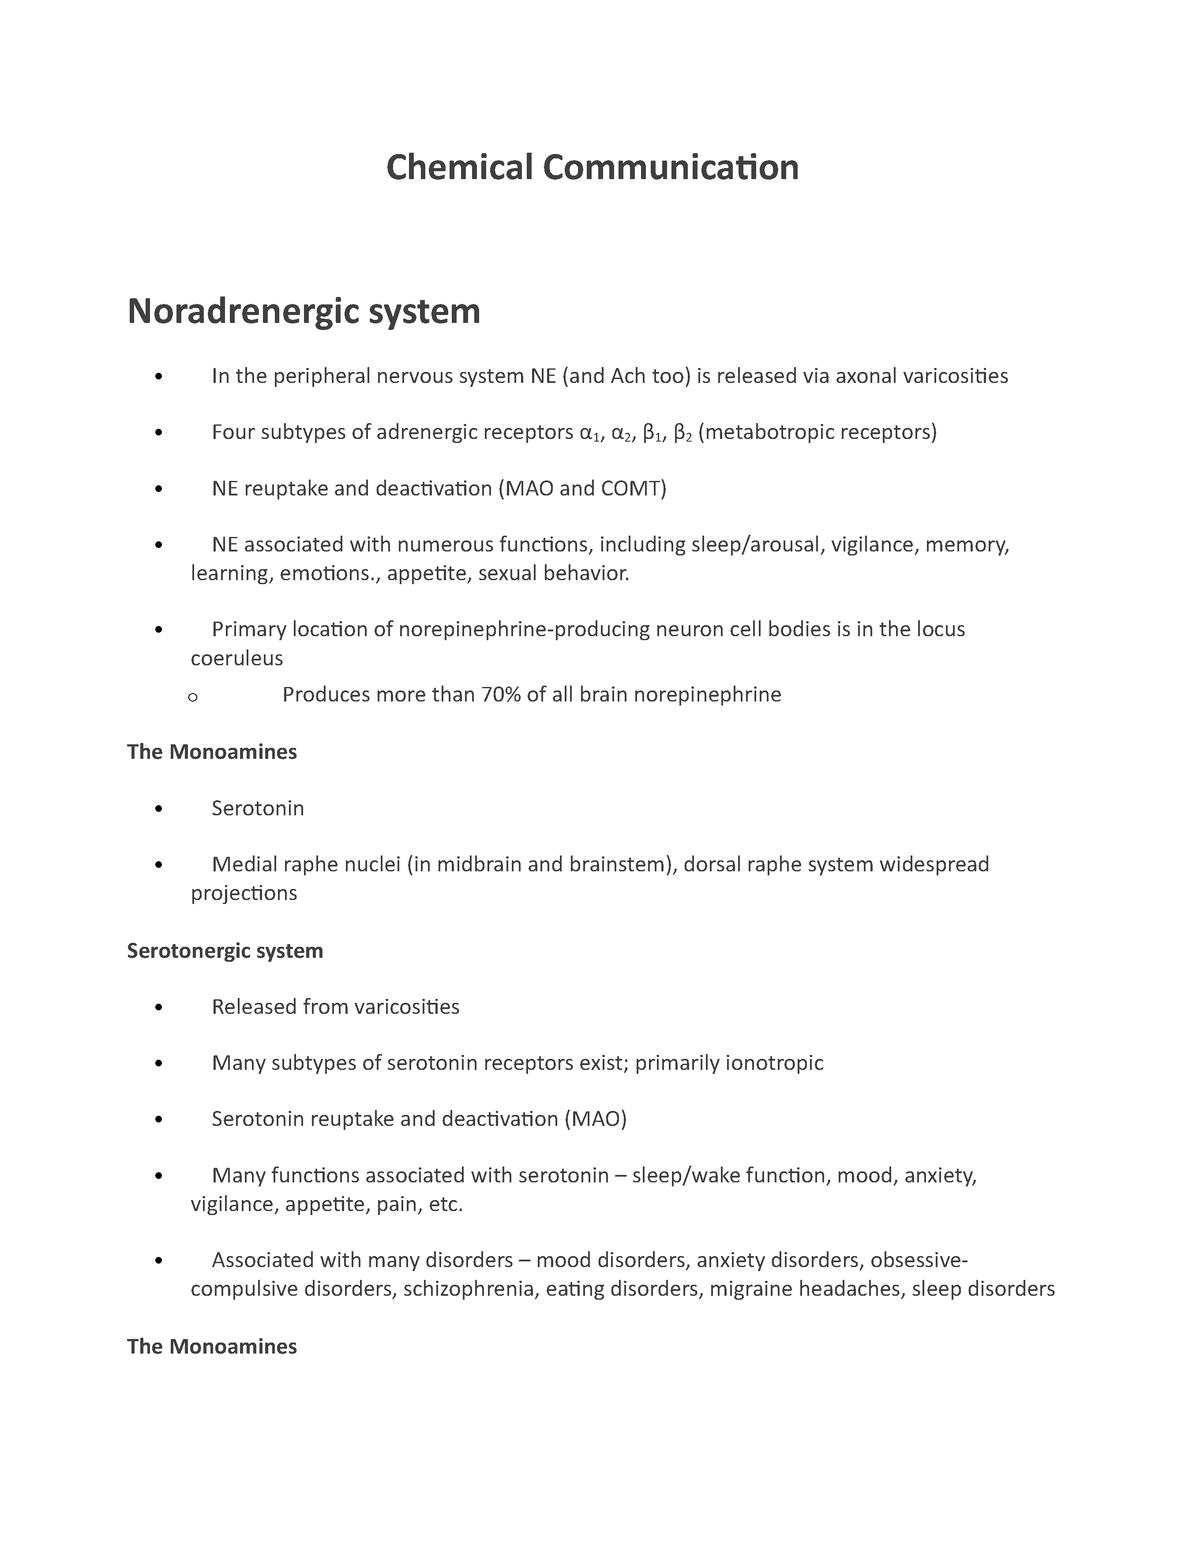 Chemical Communication 3 - Chemical Communication Noradrenergic system ...